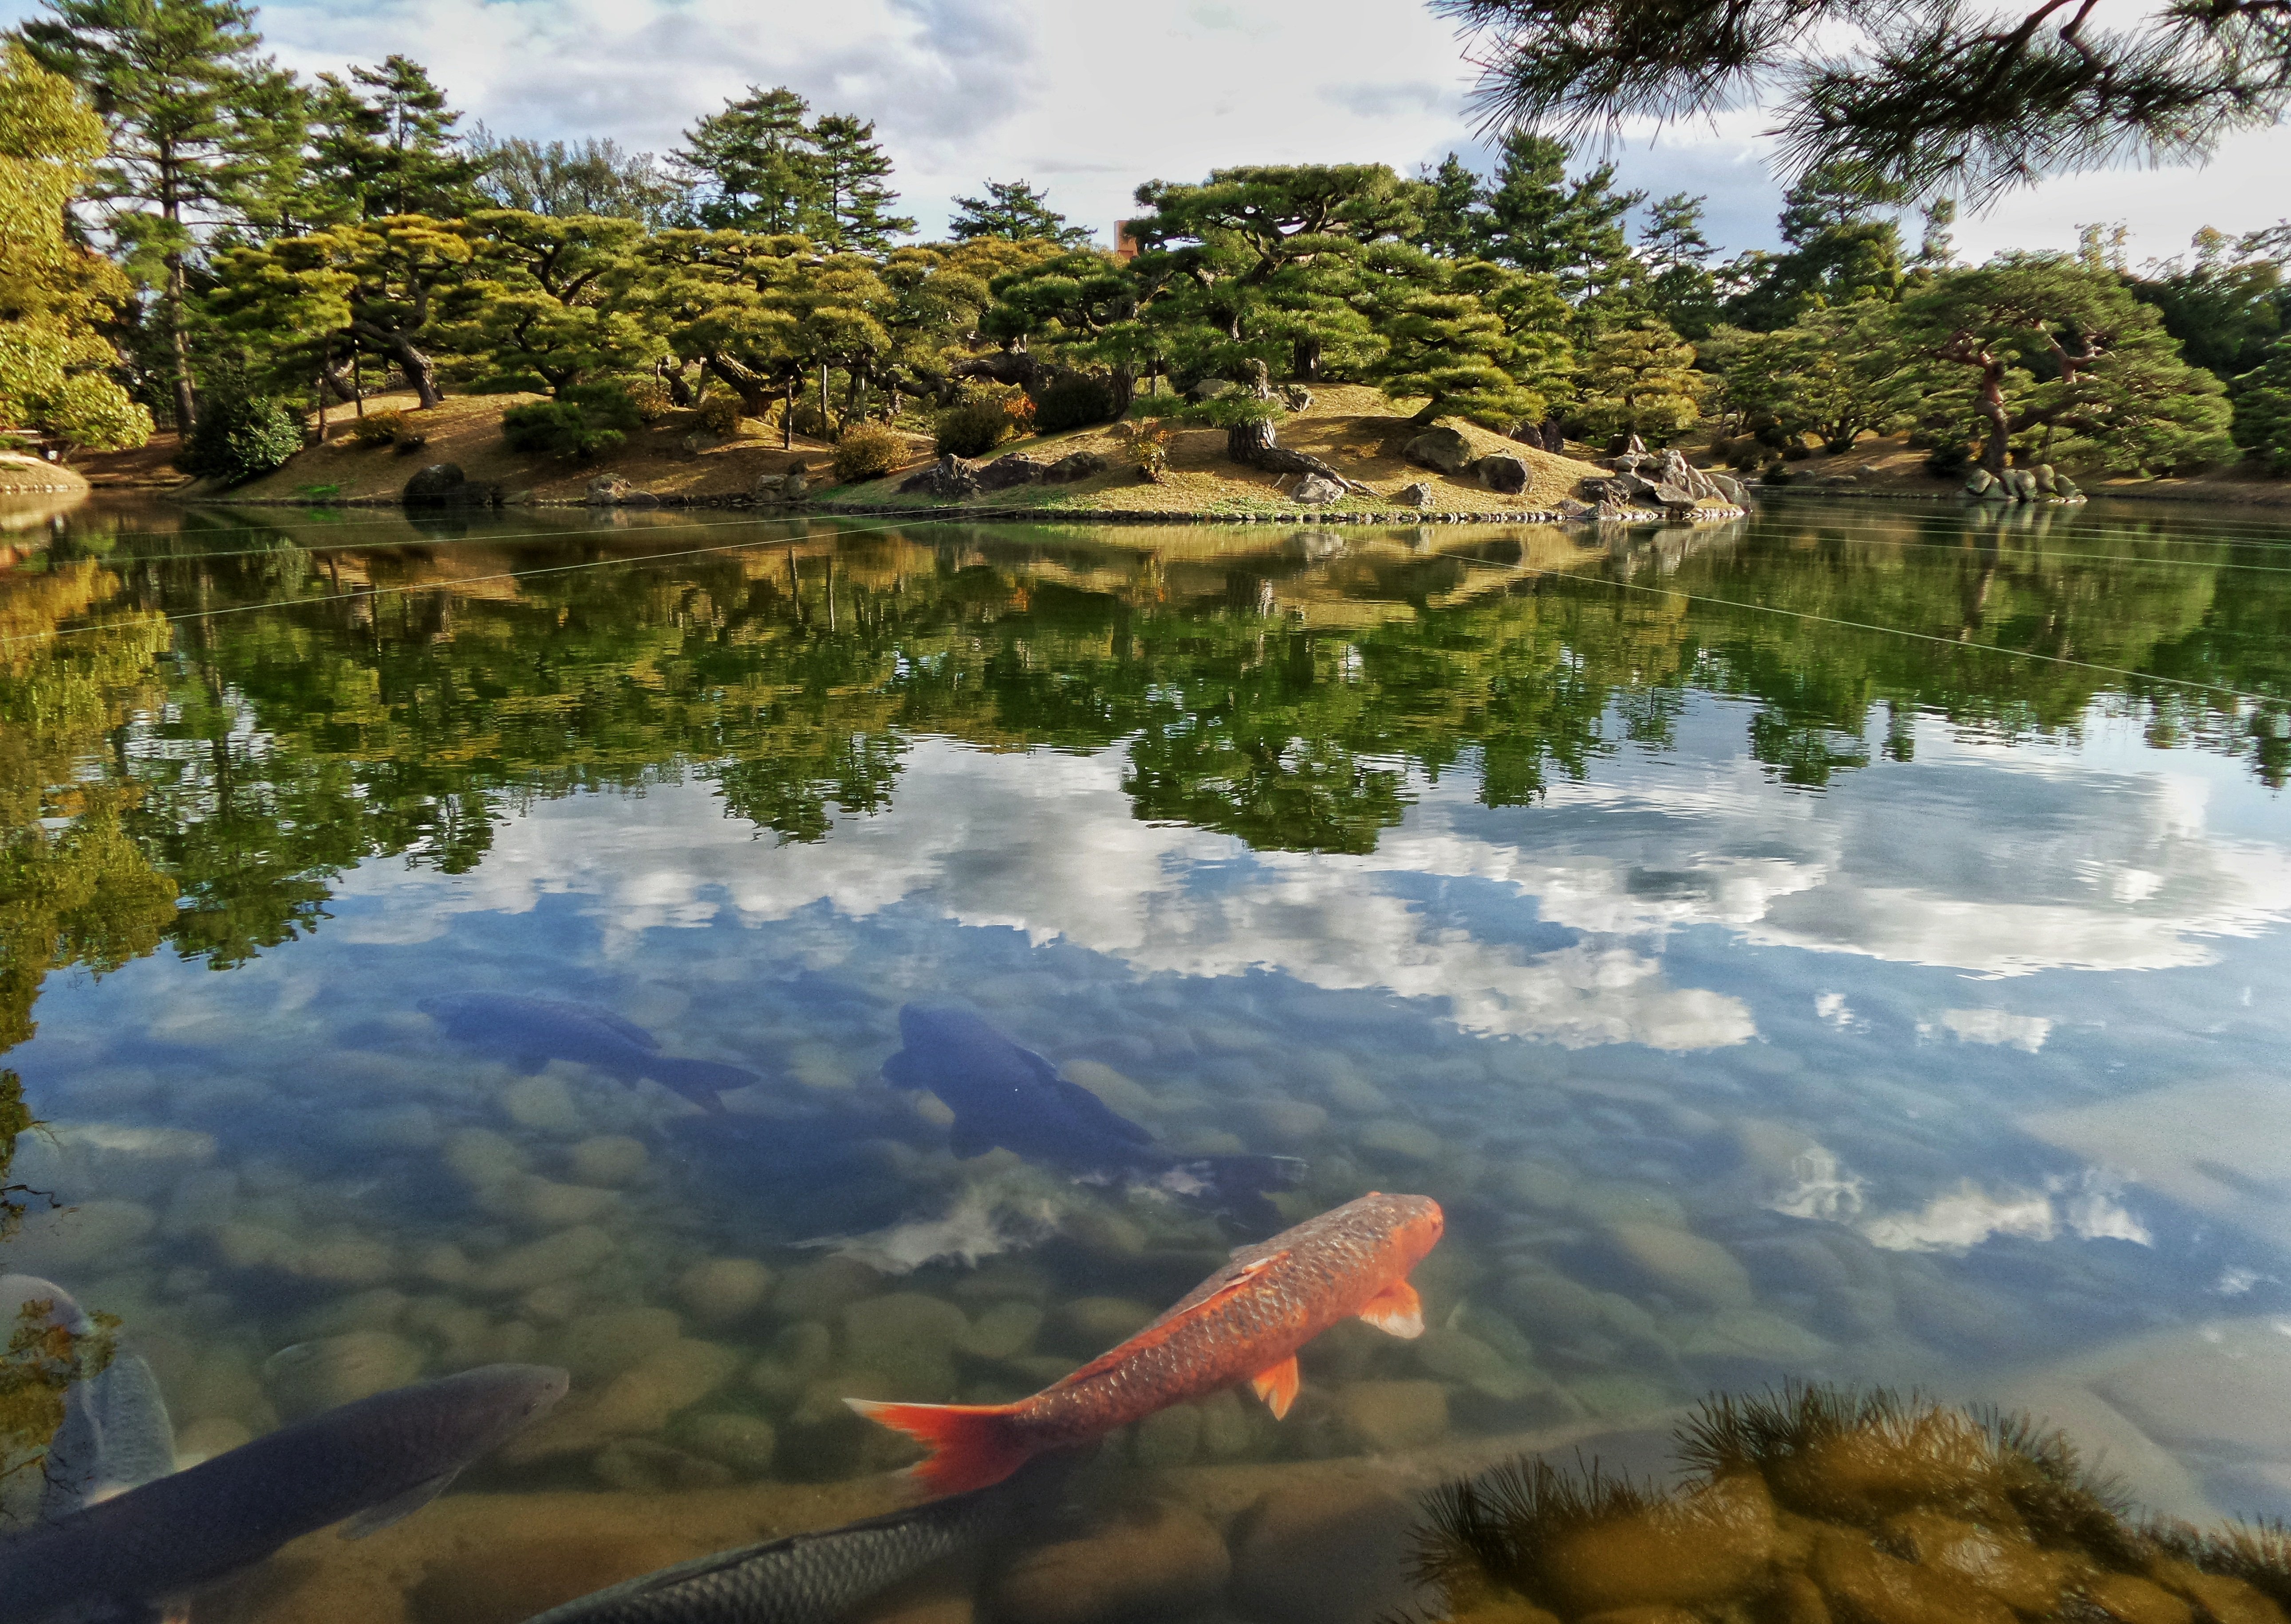 Рыбы едят растения. Япония парк Карпов коя. Реки с карпами кои в Японии. Рыба в озере. Рыбки в озере.